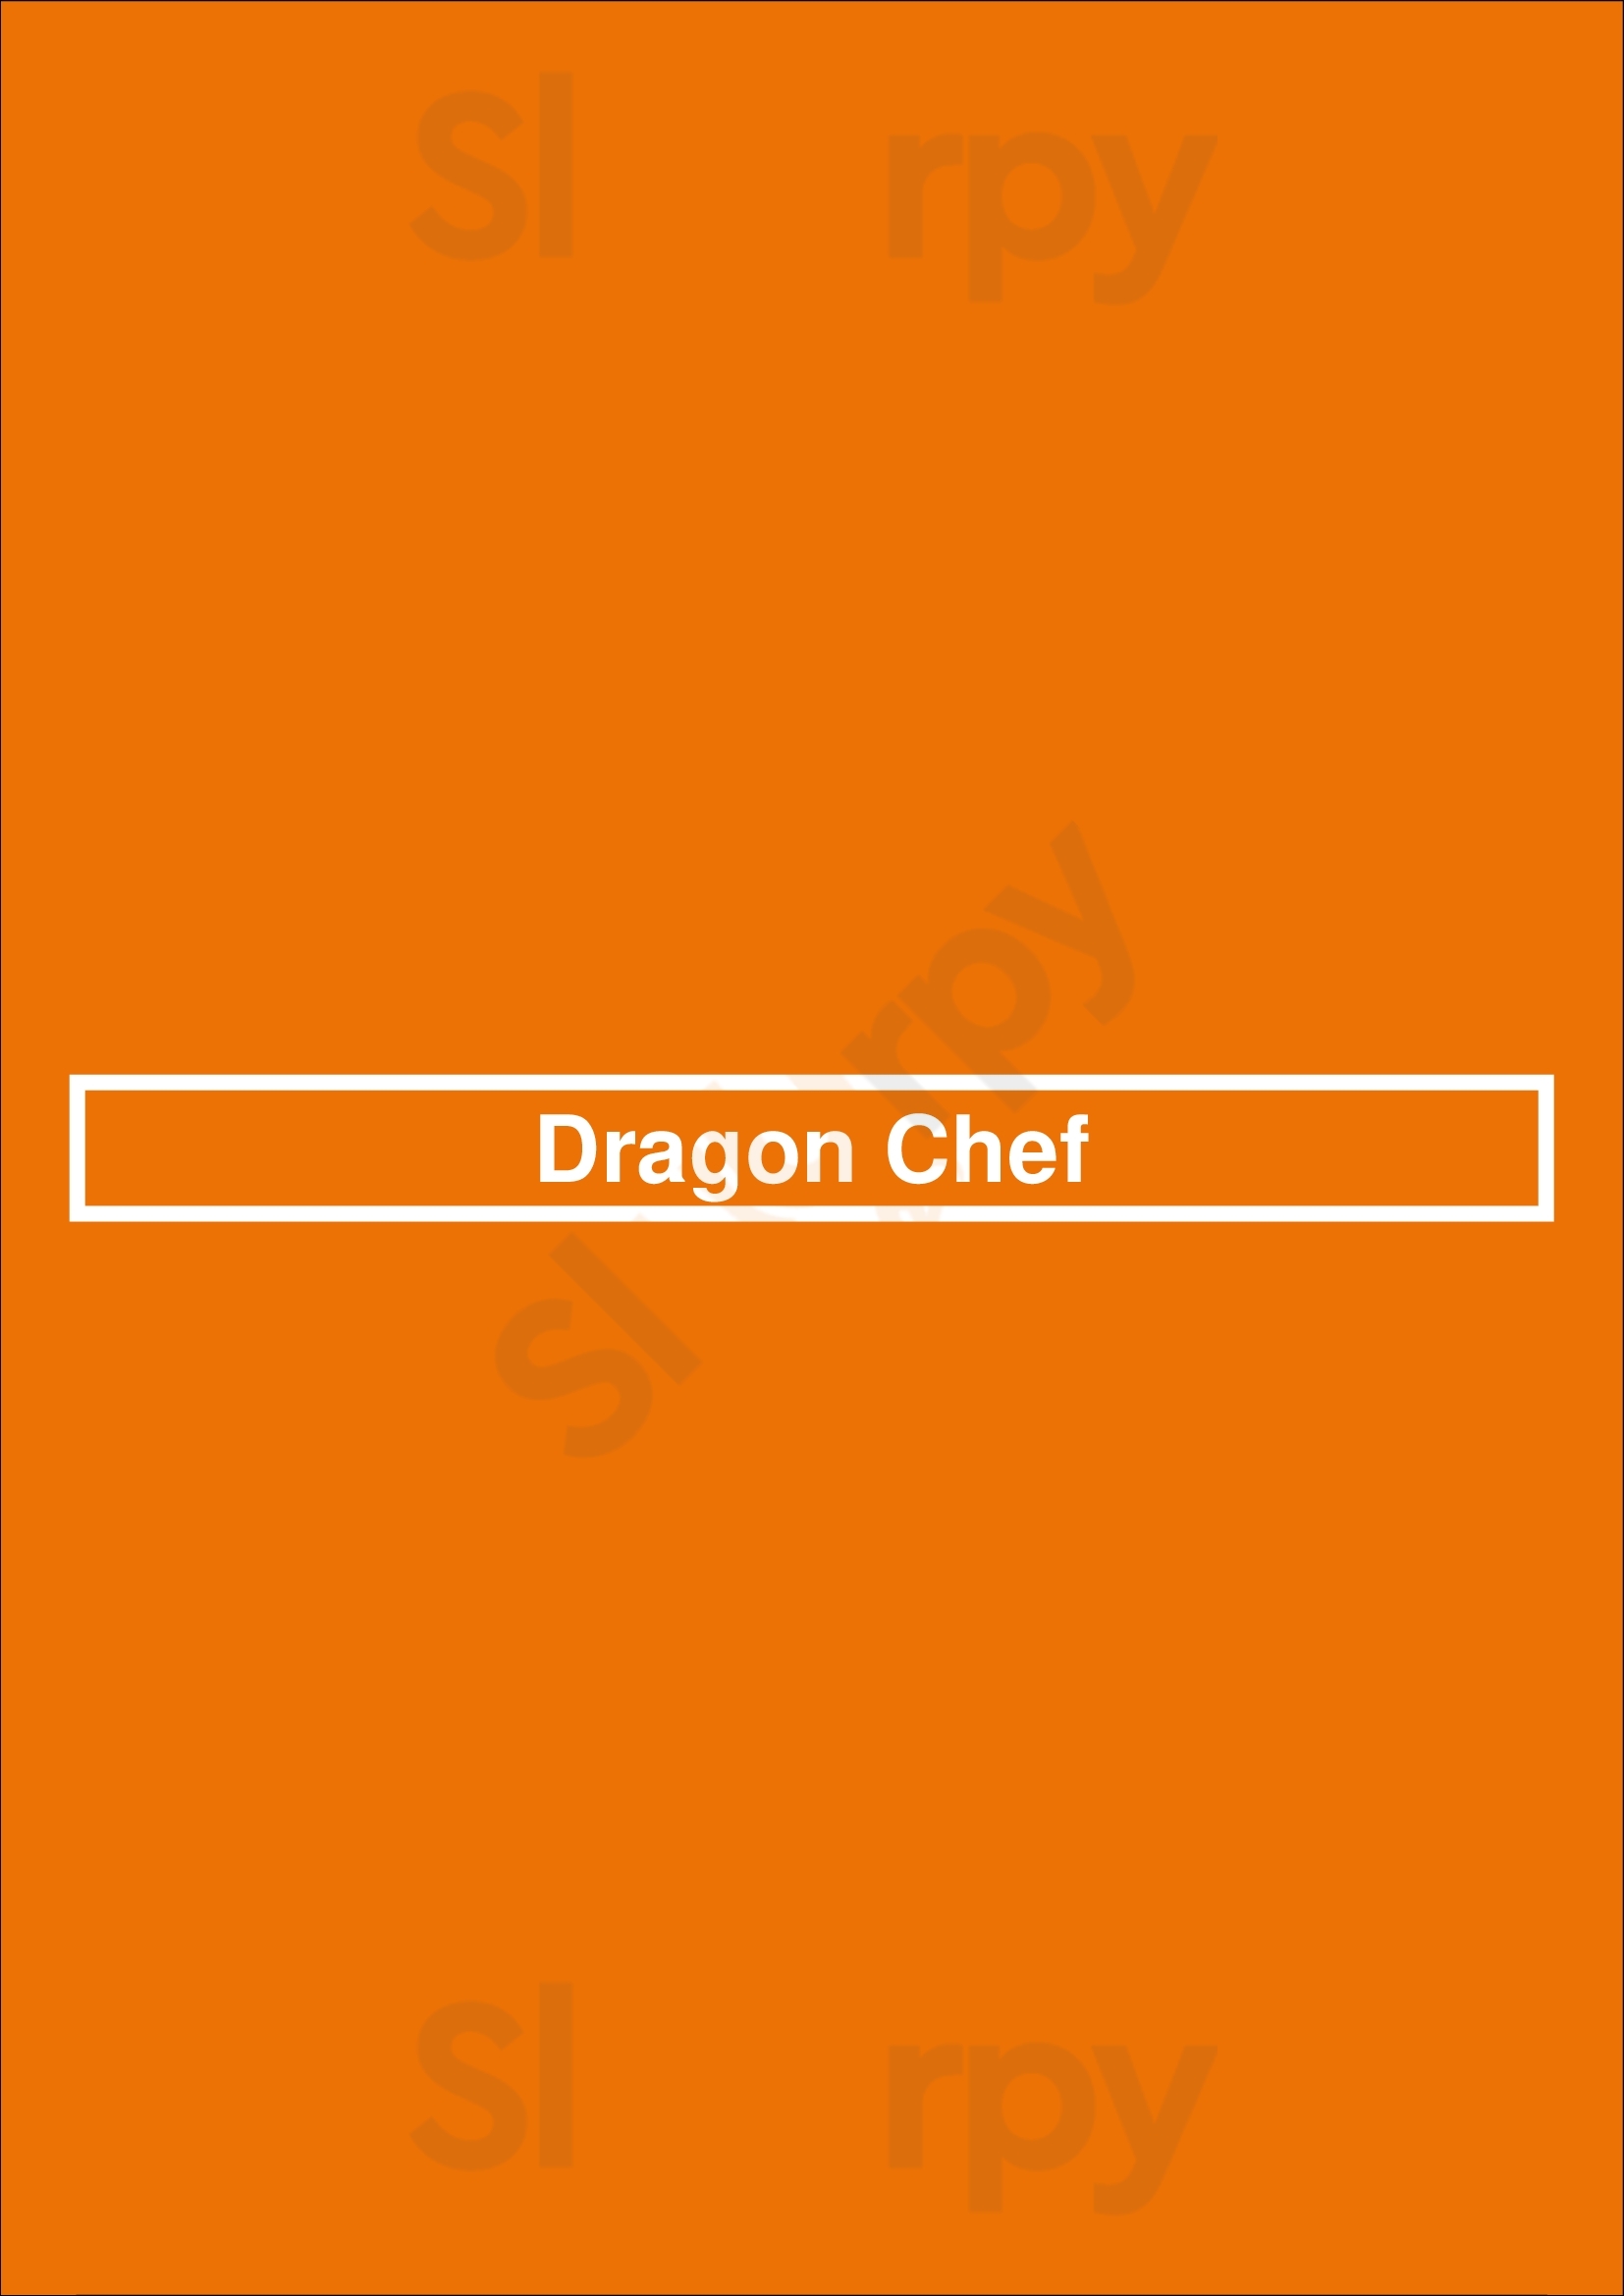 Dragon Chef Wickford Menu - 1